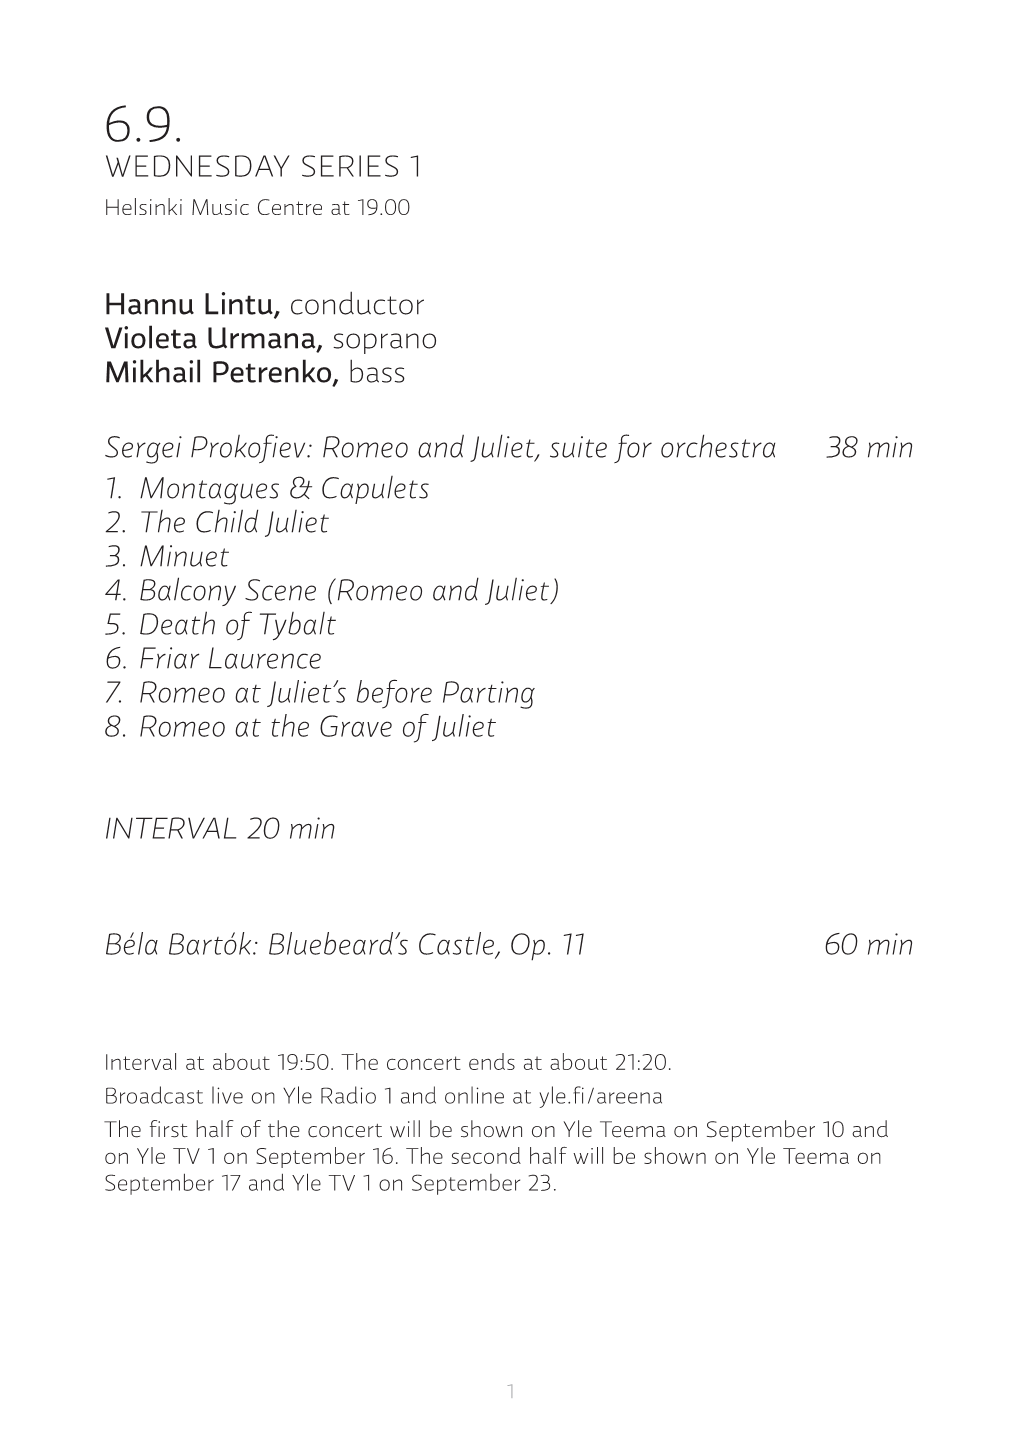 WEDNESDAY SERIES 1 Hannu Lintu, Conductor Violeta